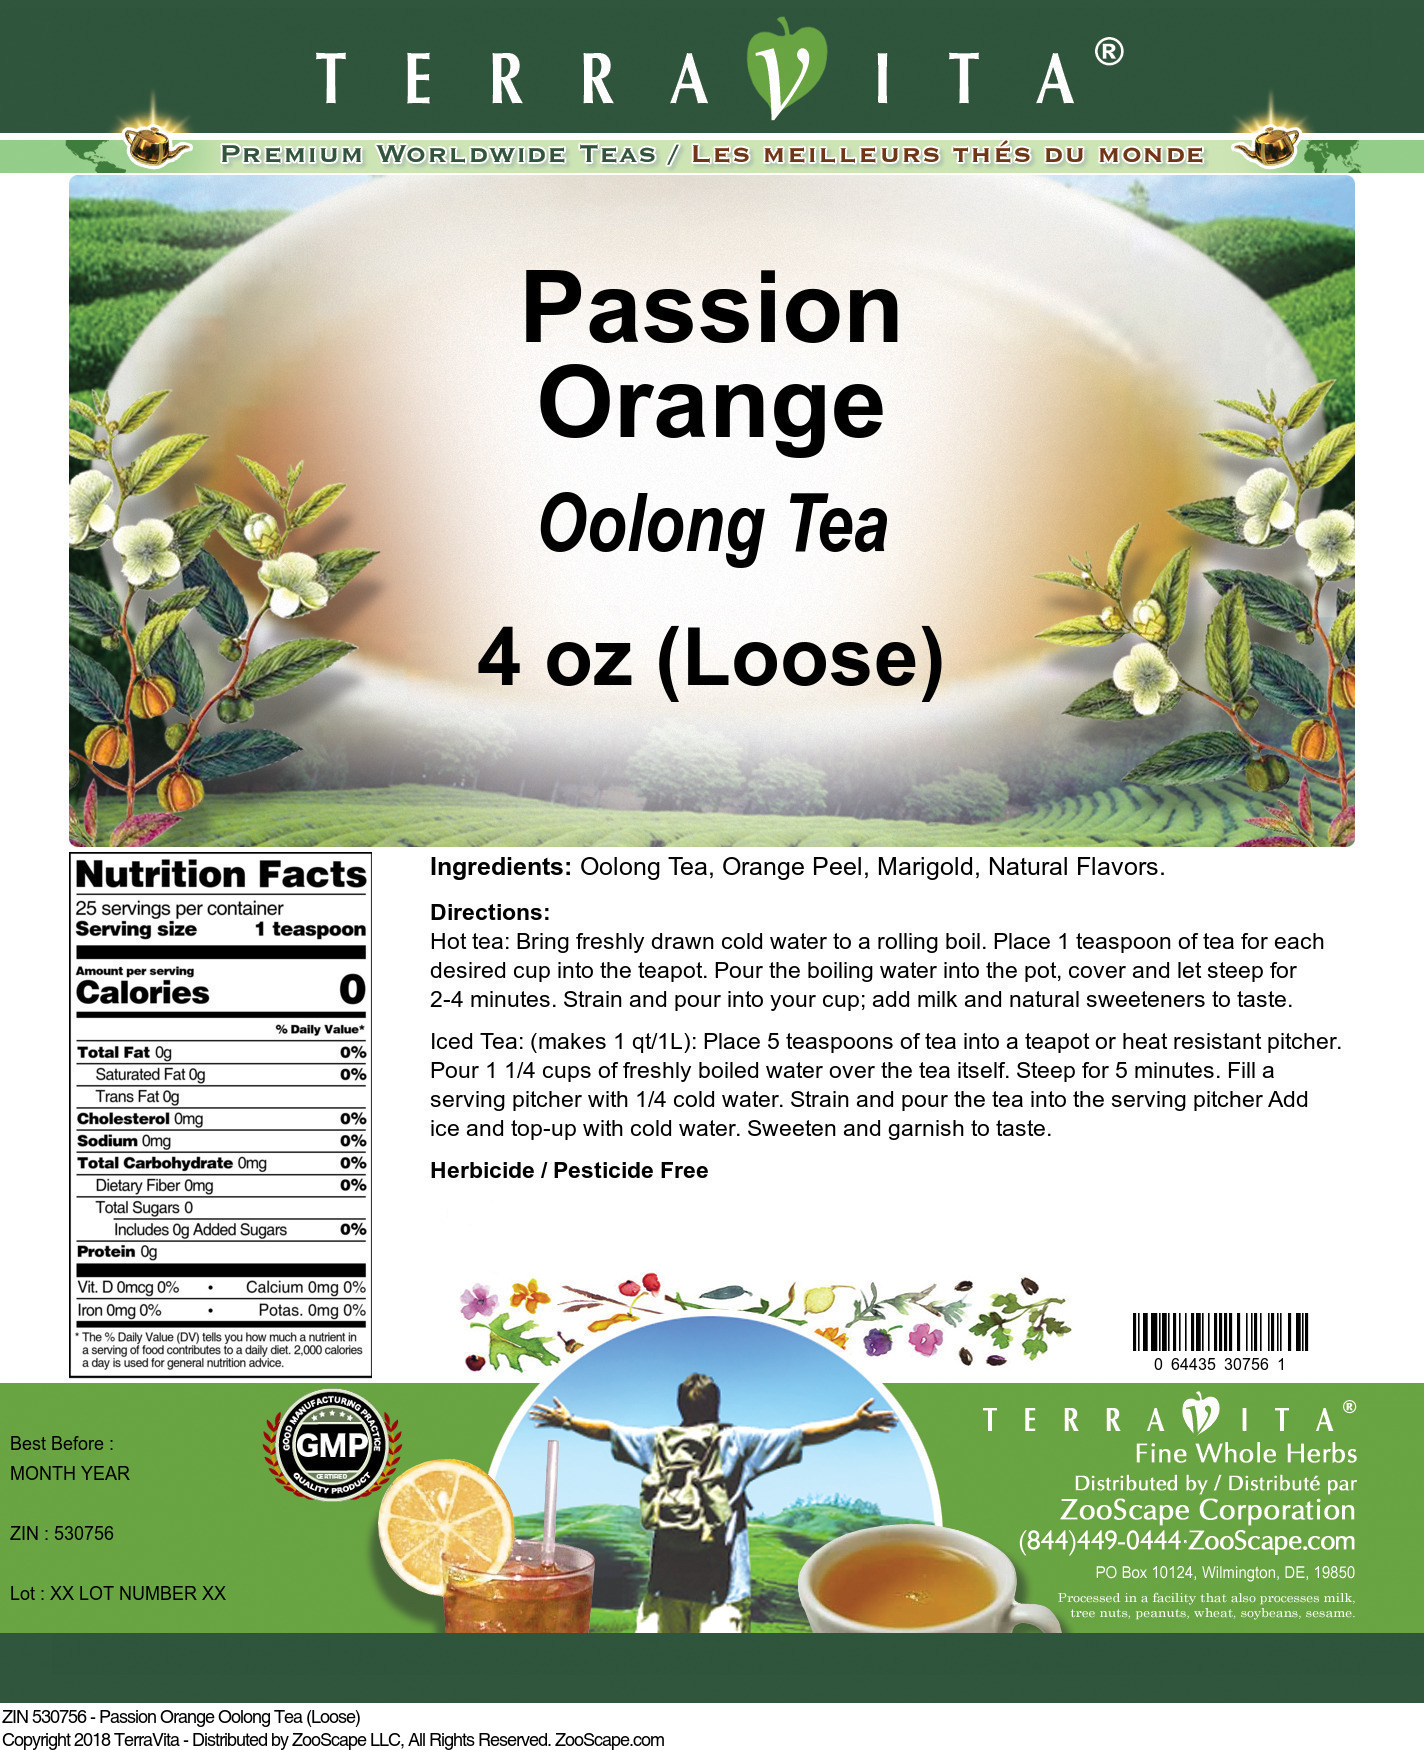 Passion Orange Oolong Tea (Loose) - Label